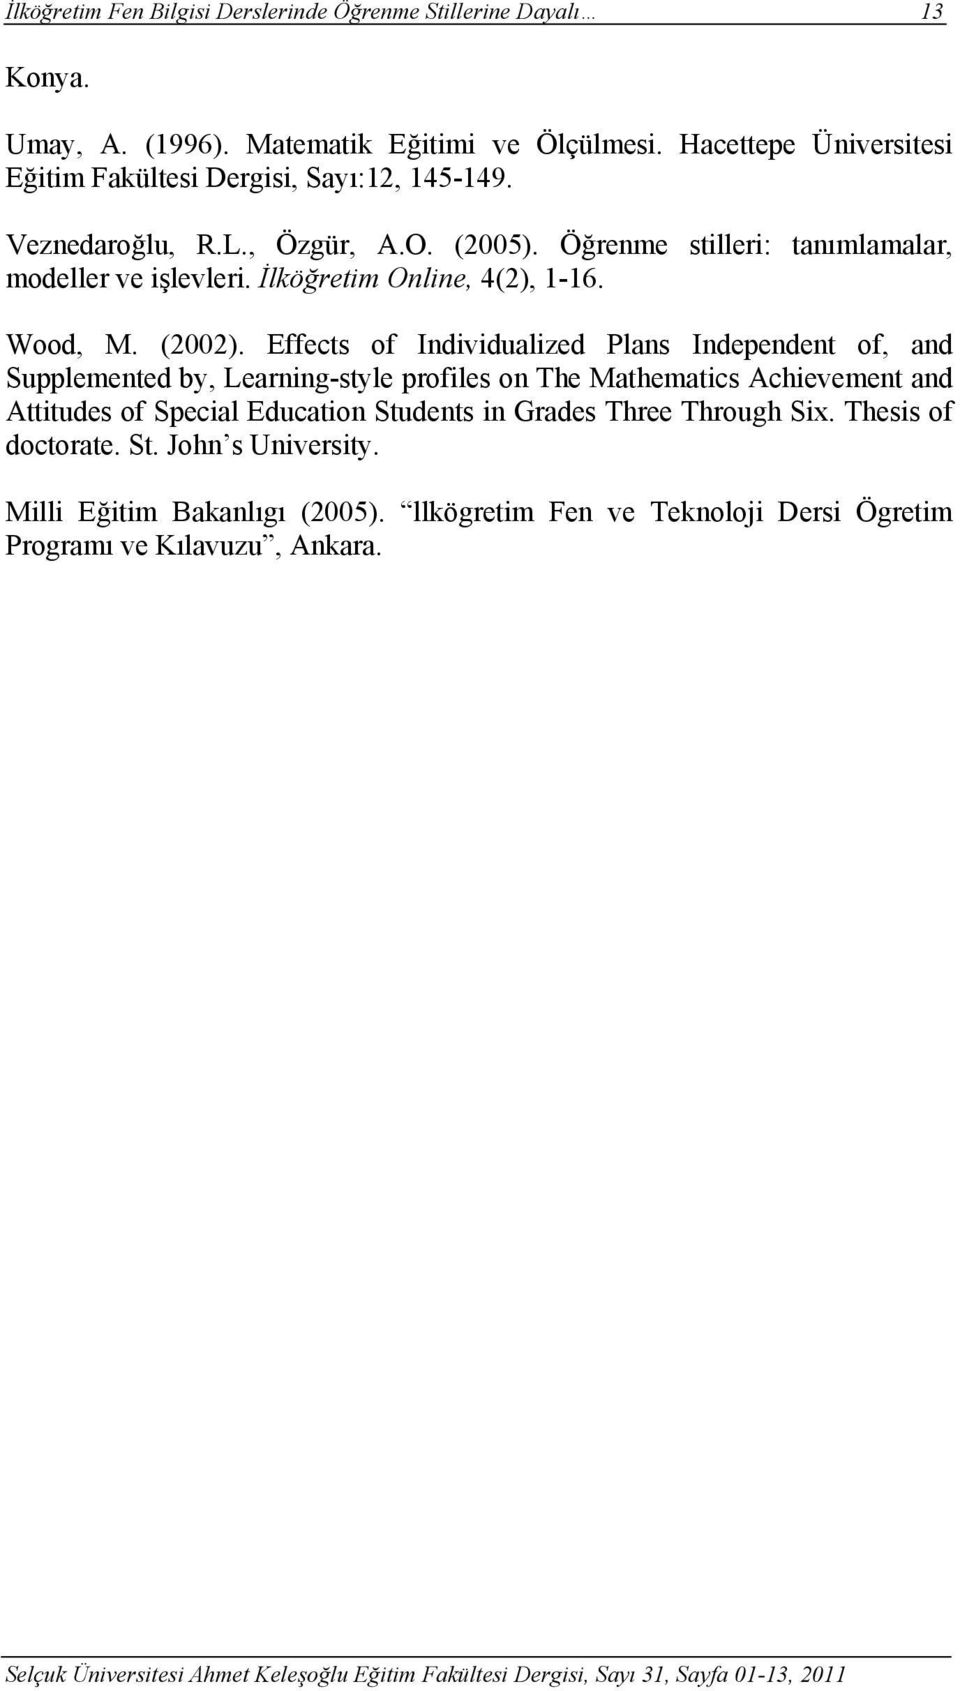 İlköğretim Online, 4(2), 1-16. Wood, M. (2002).